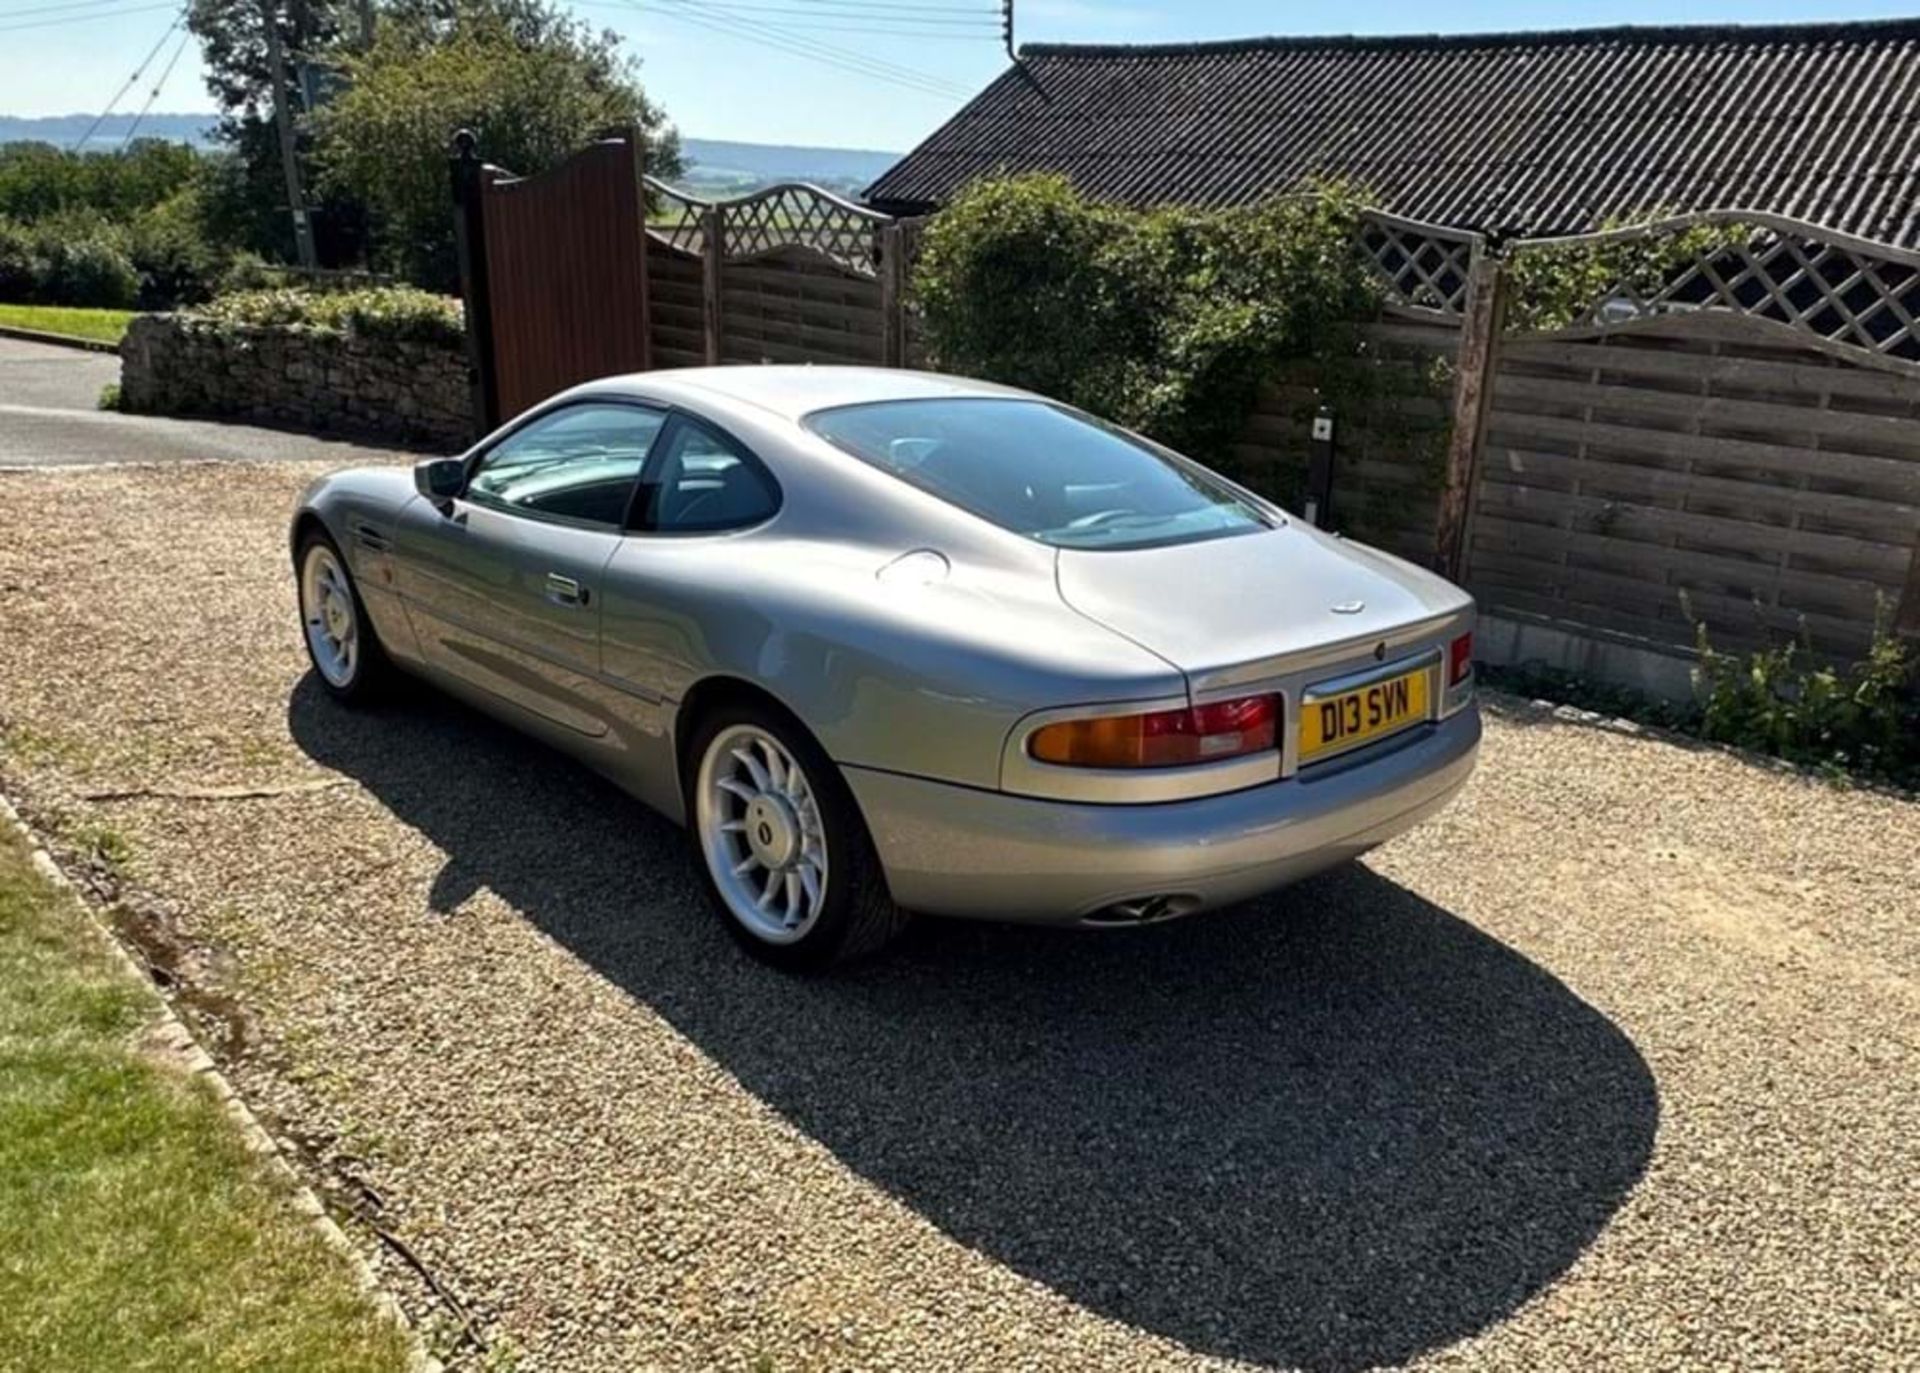 1995 Aston Martin DB7 - Image 2 of 8